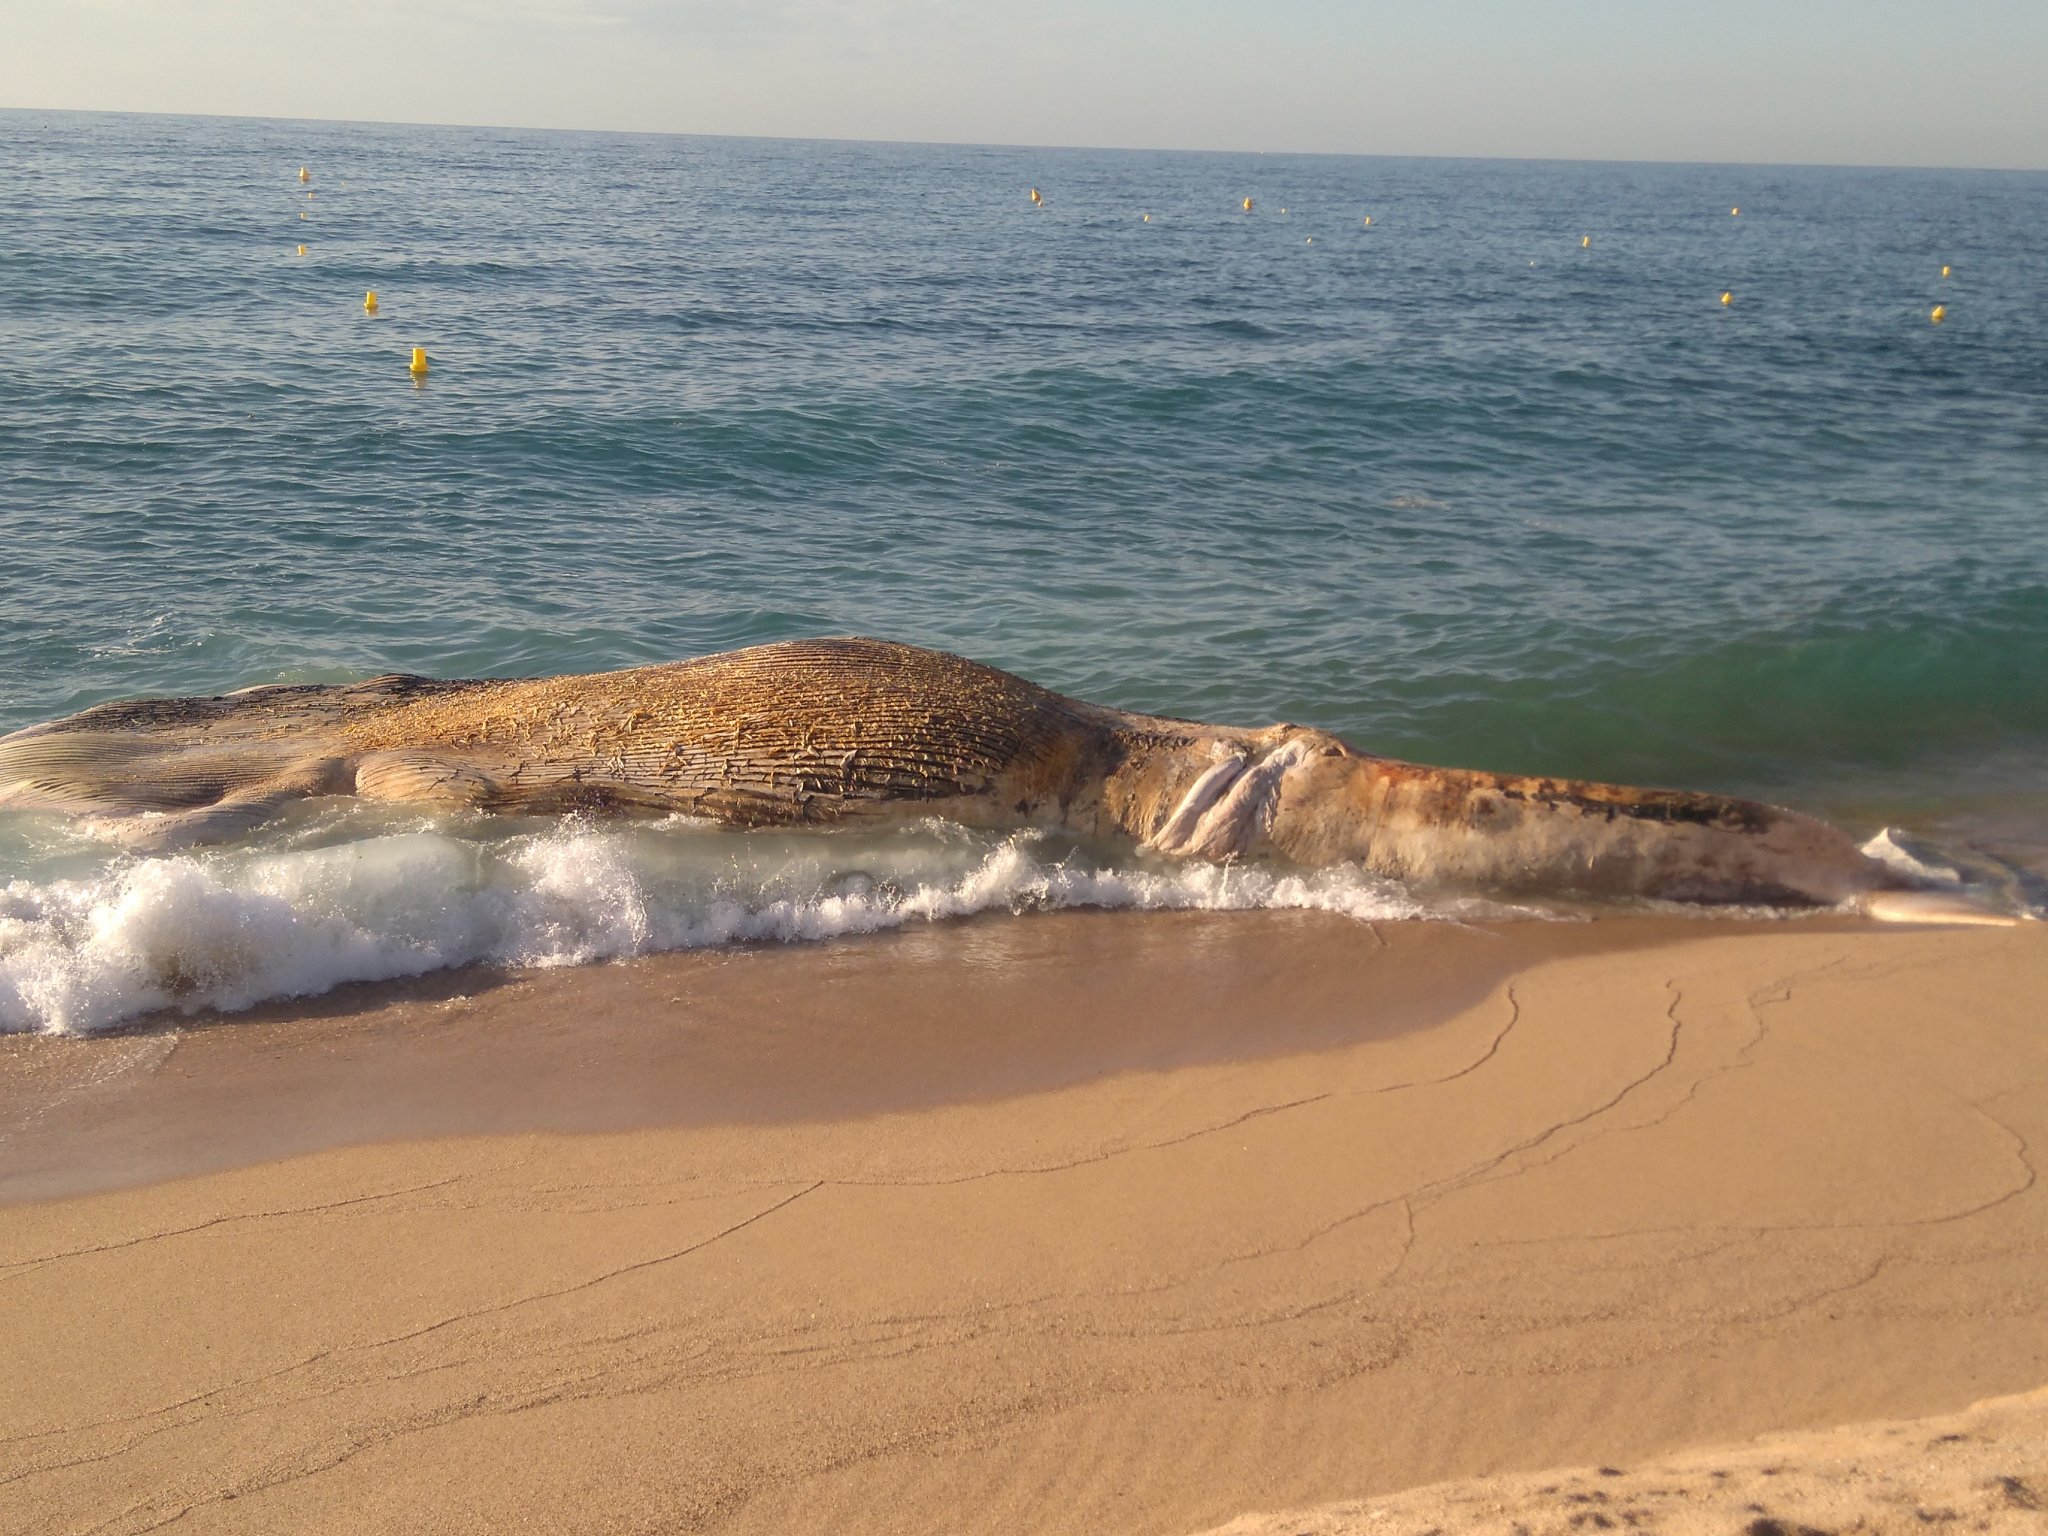 Aparece muerta una ballena en la playa de Lloret